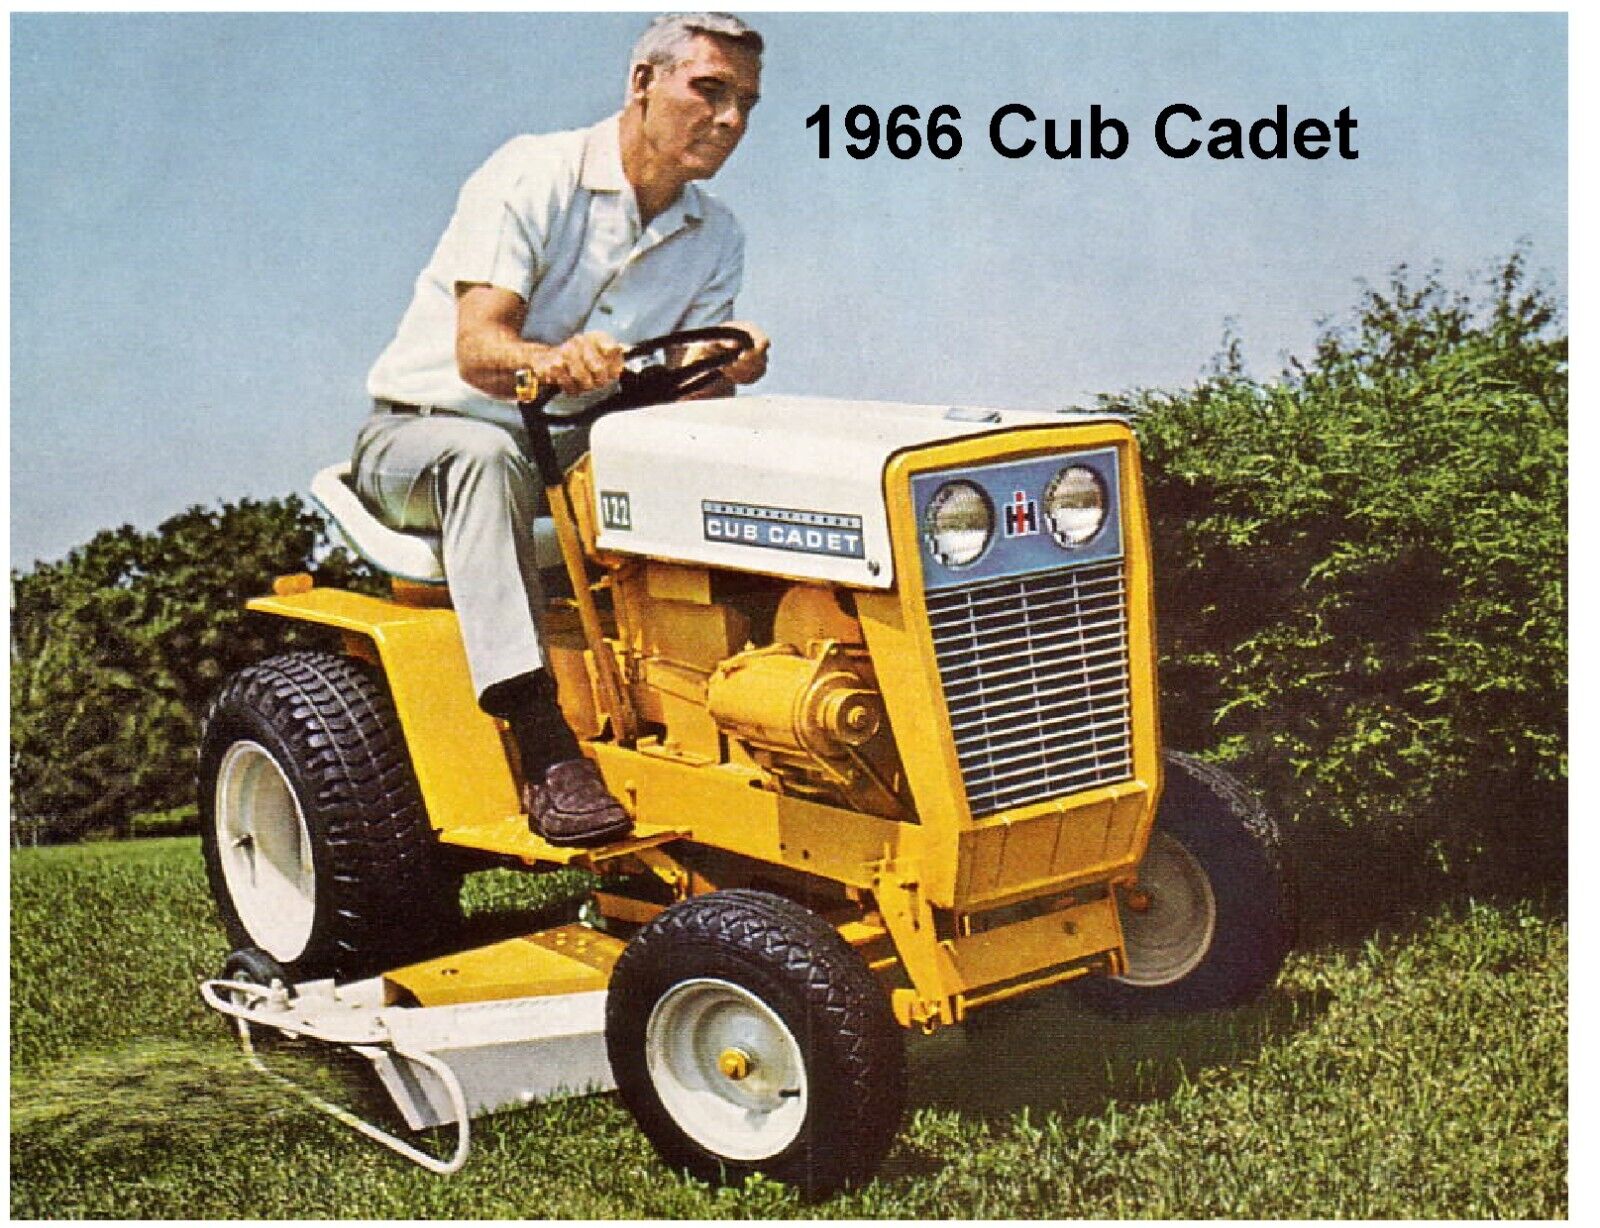 1966 Cub Cadet Lawn Tractor Refrigerator / Tool Box  Magnet